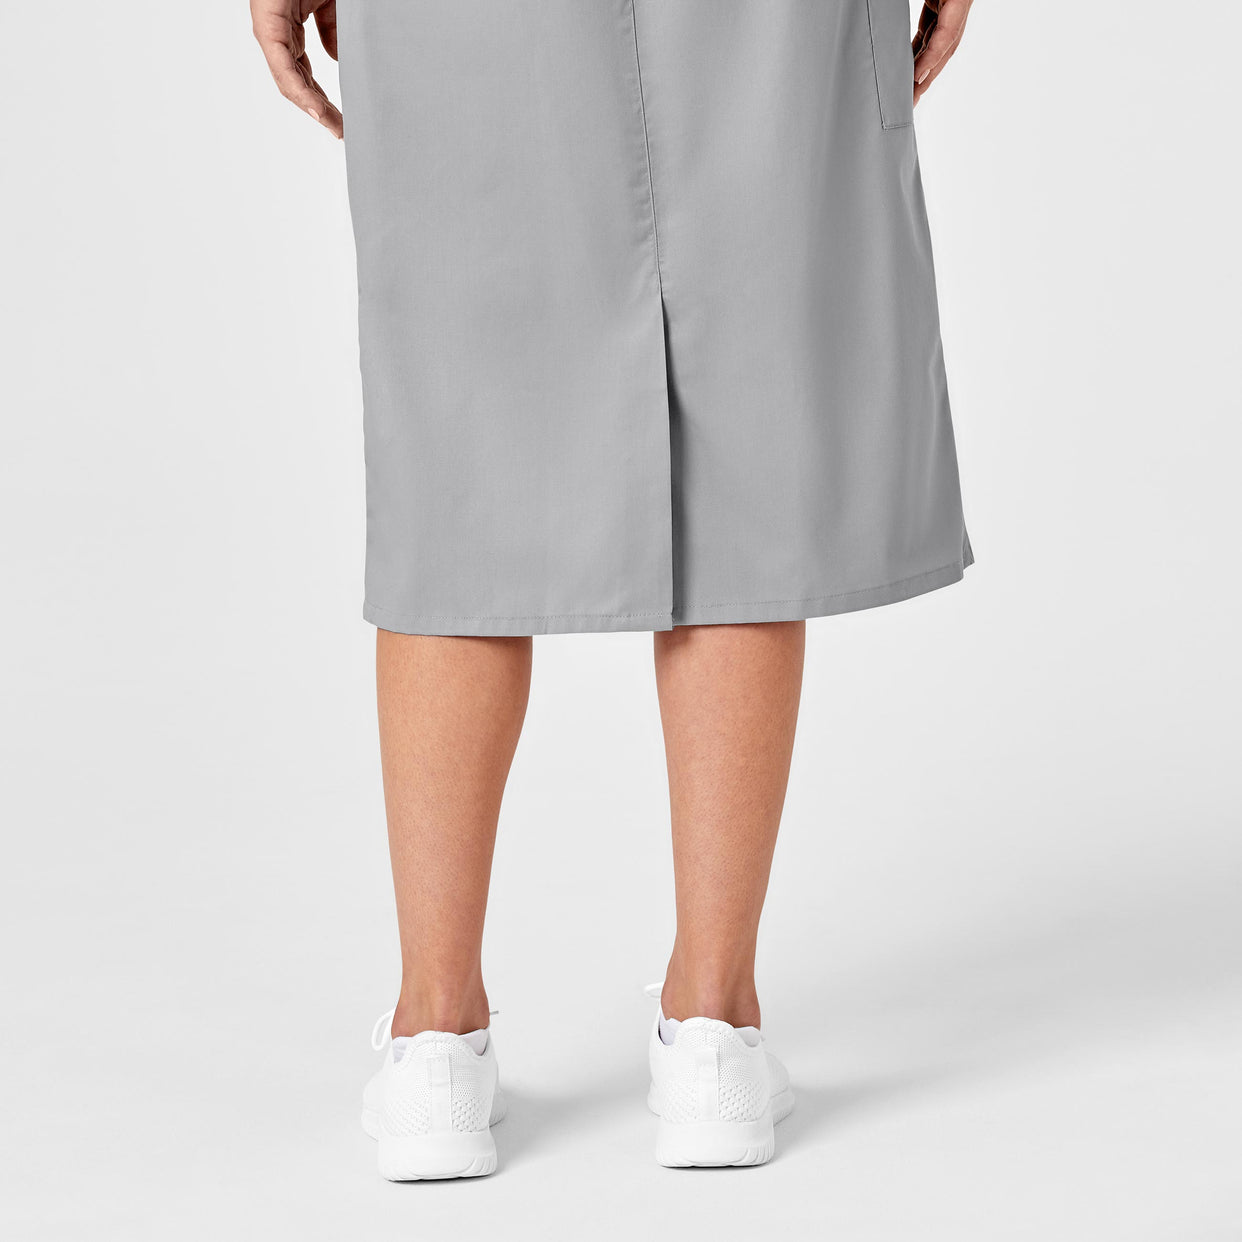 WonderWORK Women's Pull On Cargo Scrub Skirt - Grey